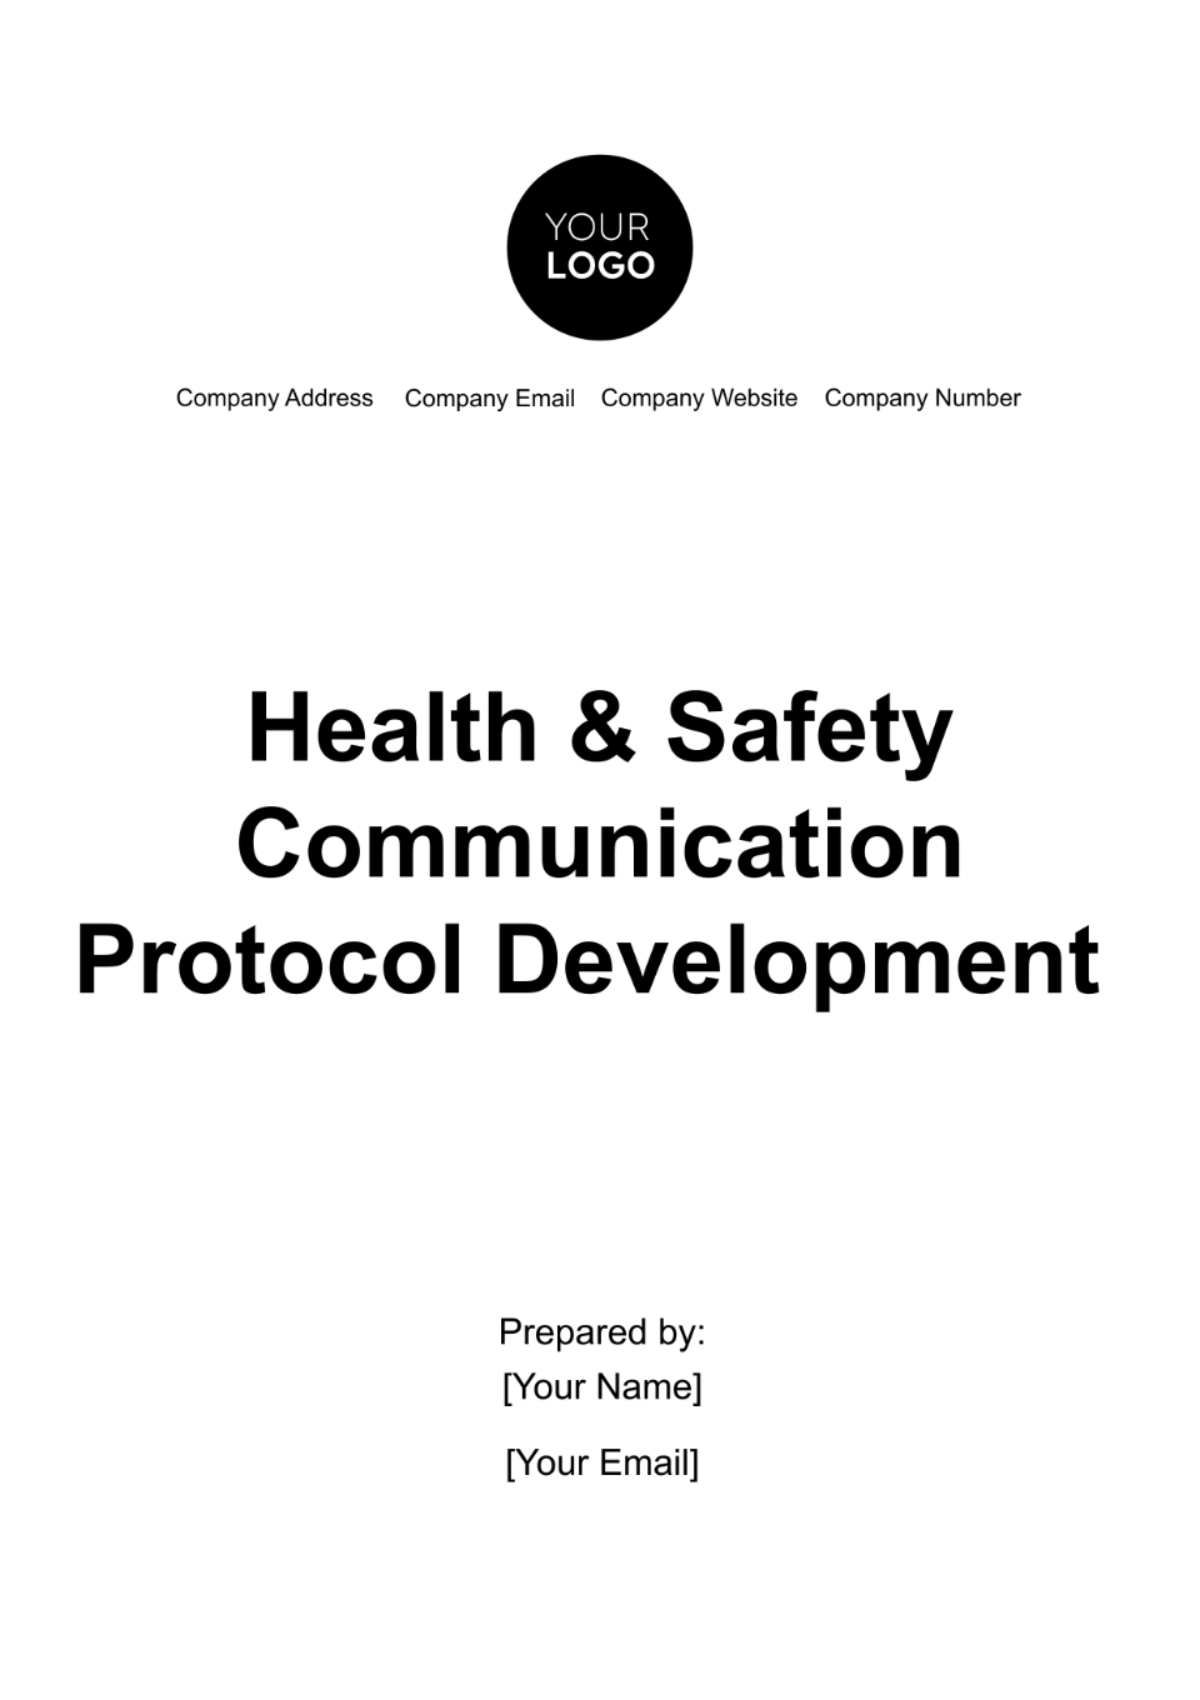 Health & Safety Communication Protocol Development Template